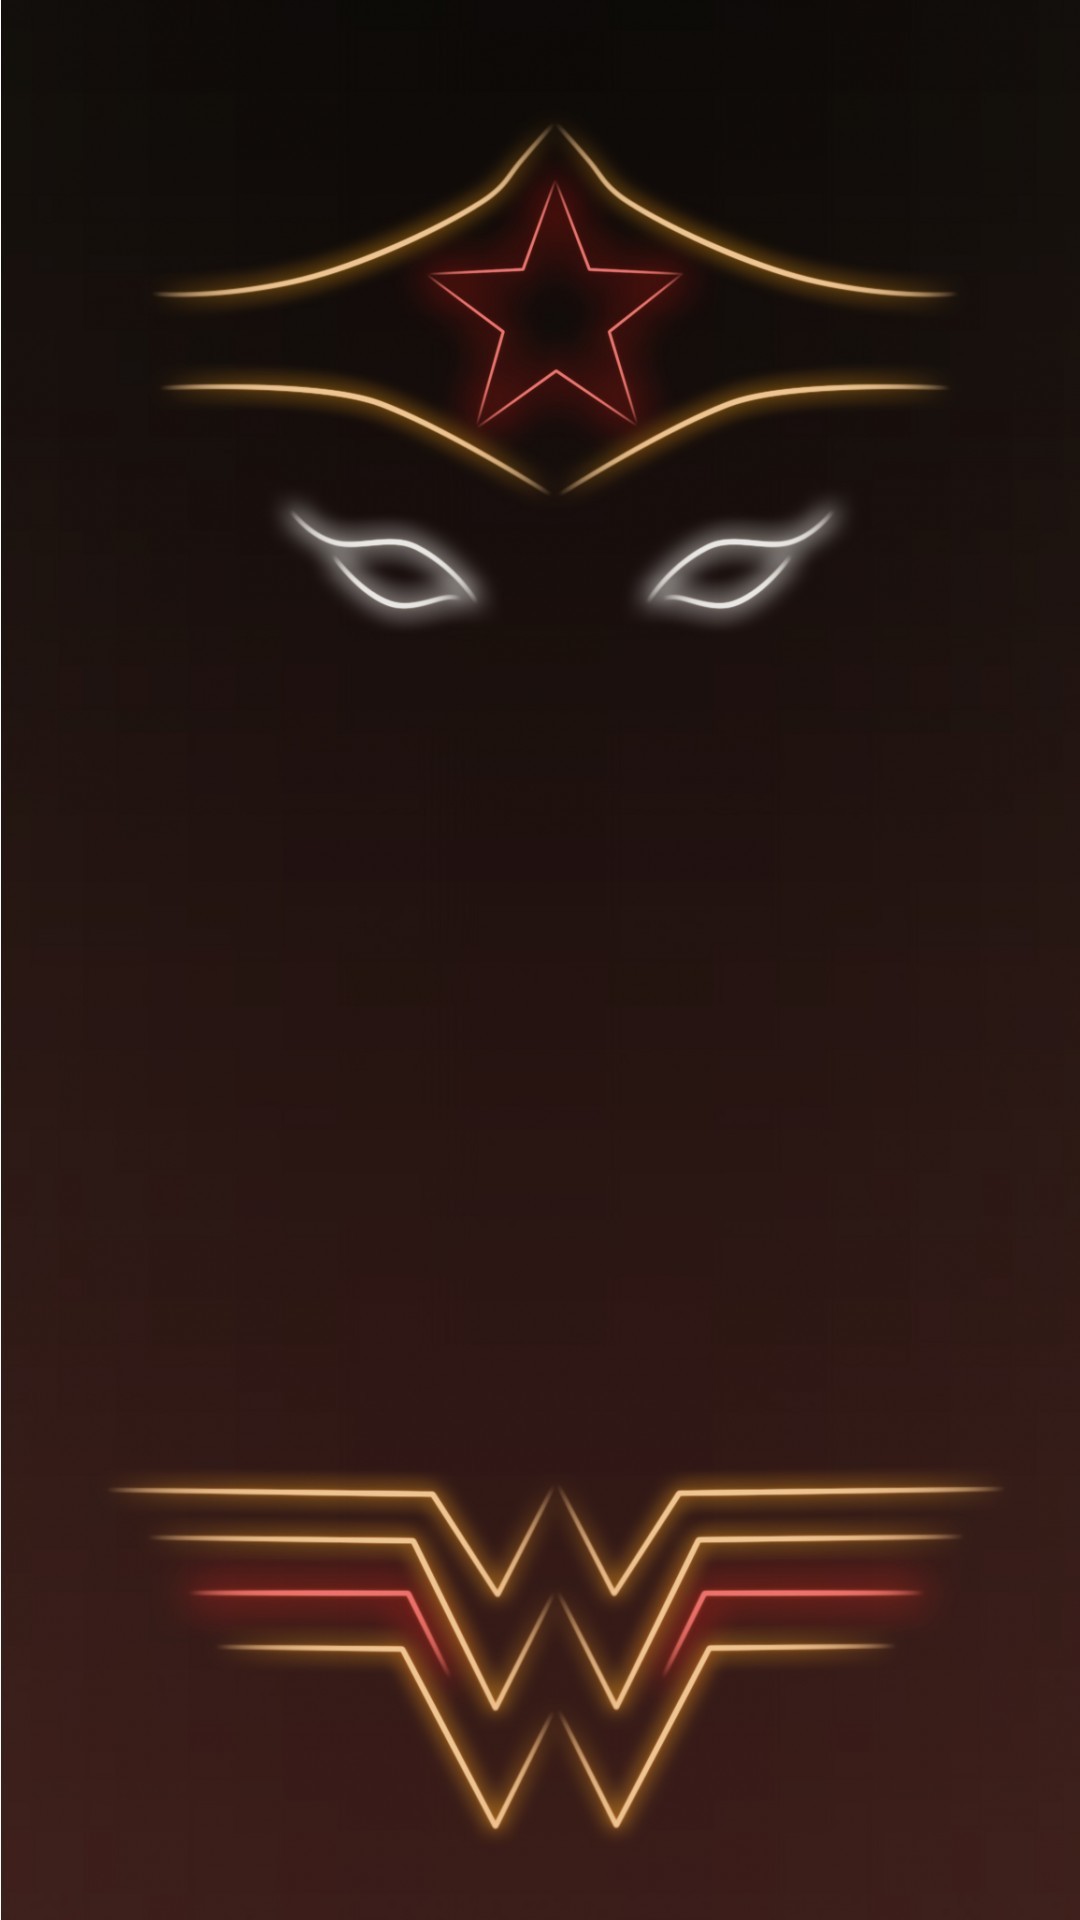 Wonder Woman Logo Wallpaper ·① WallpaperTag